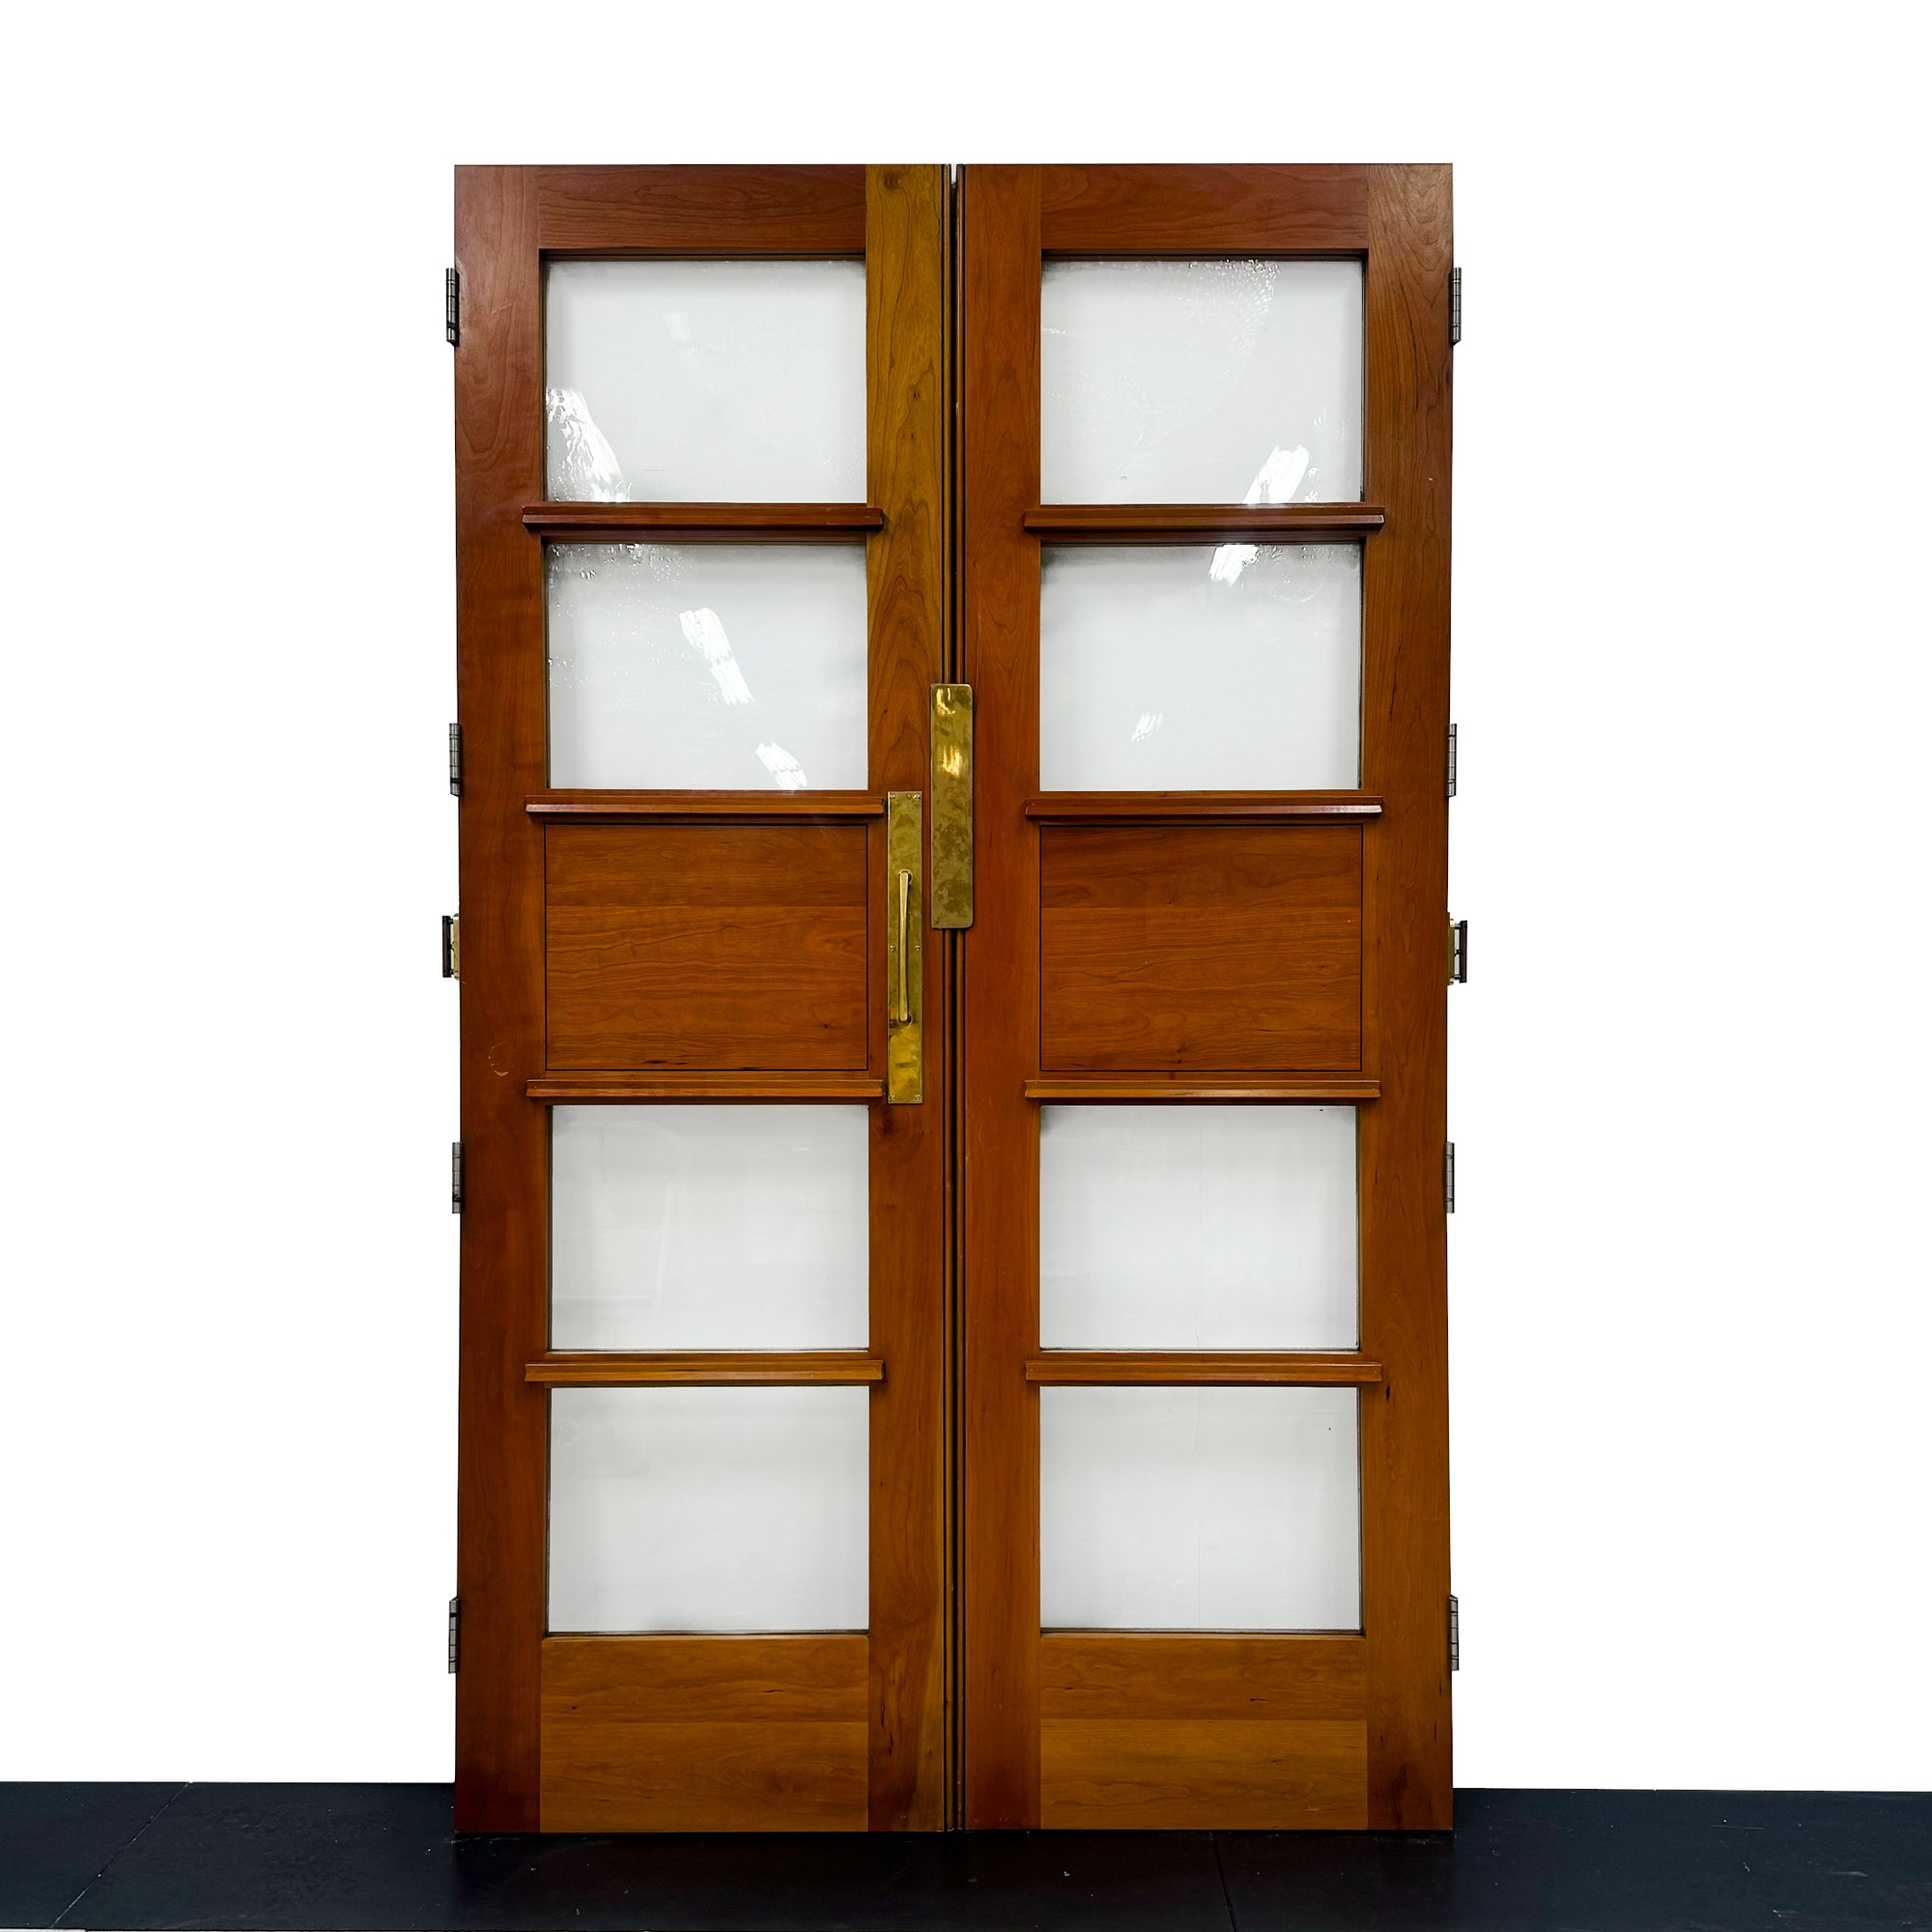 Clothworkers' Pair Walnut Glazed Doors - 238cm x 142.5cm | The Architectural Forum